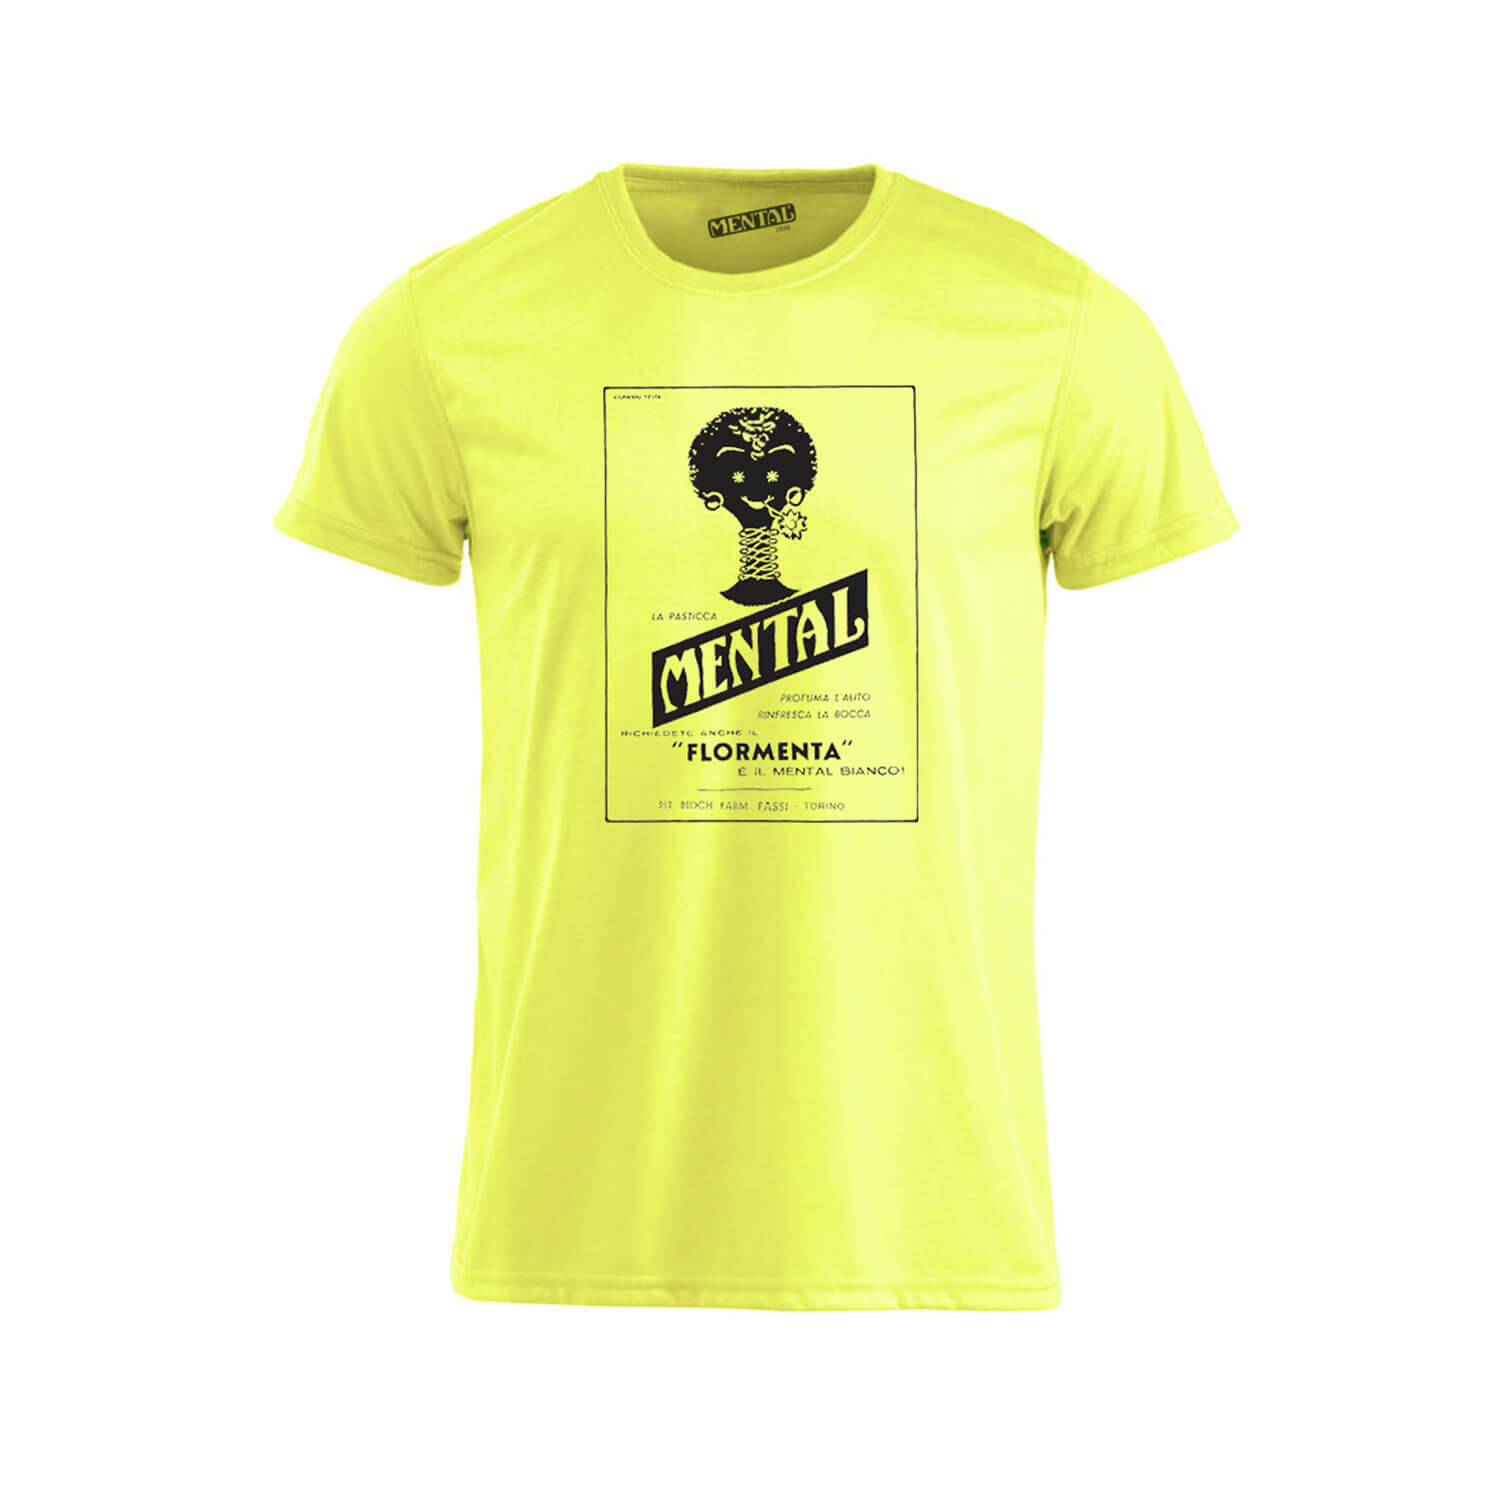 T-shirt giallo fluo Mental Vintage - taglia L - T-shirt